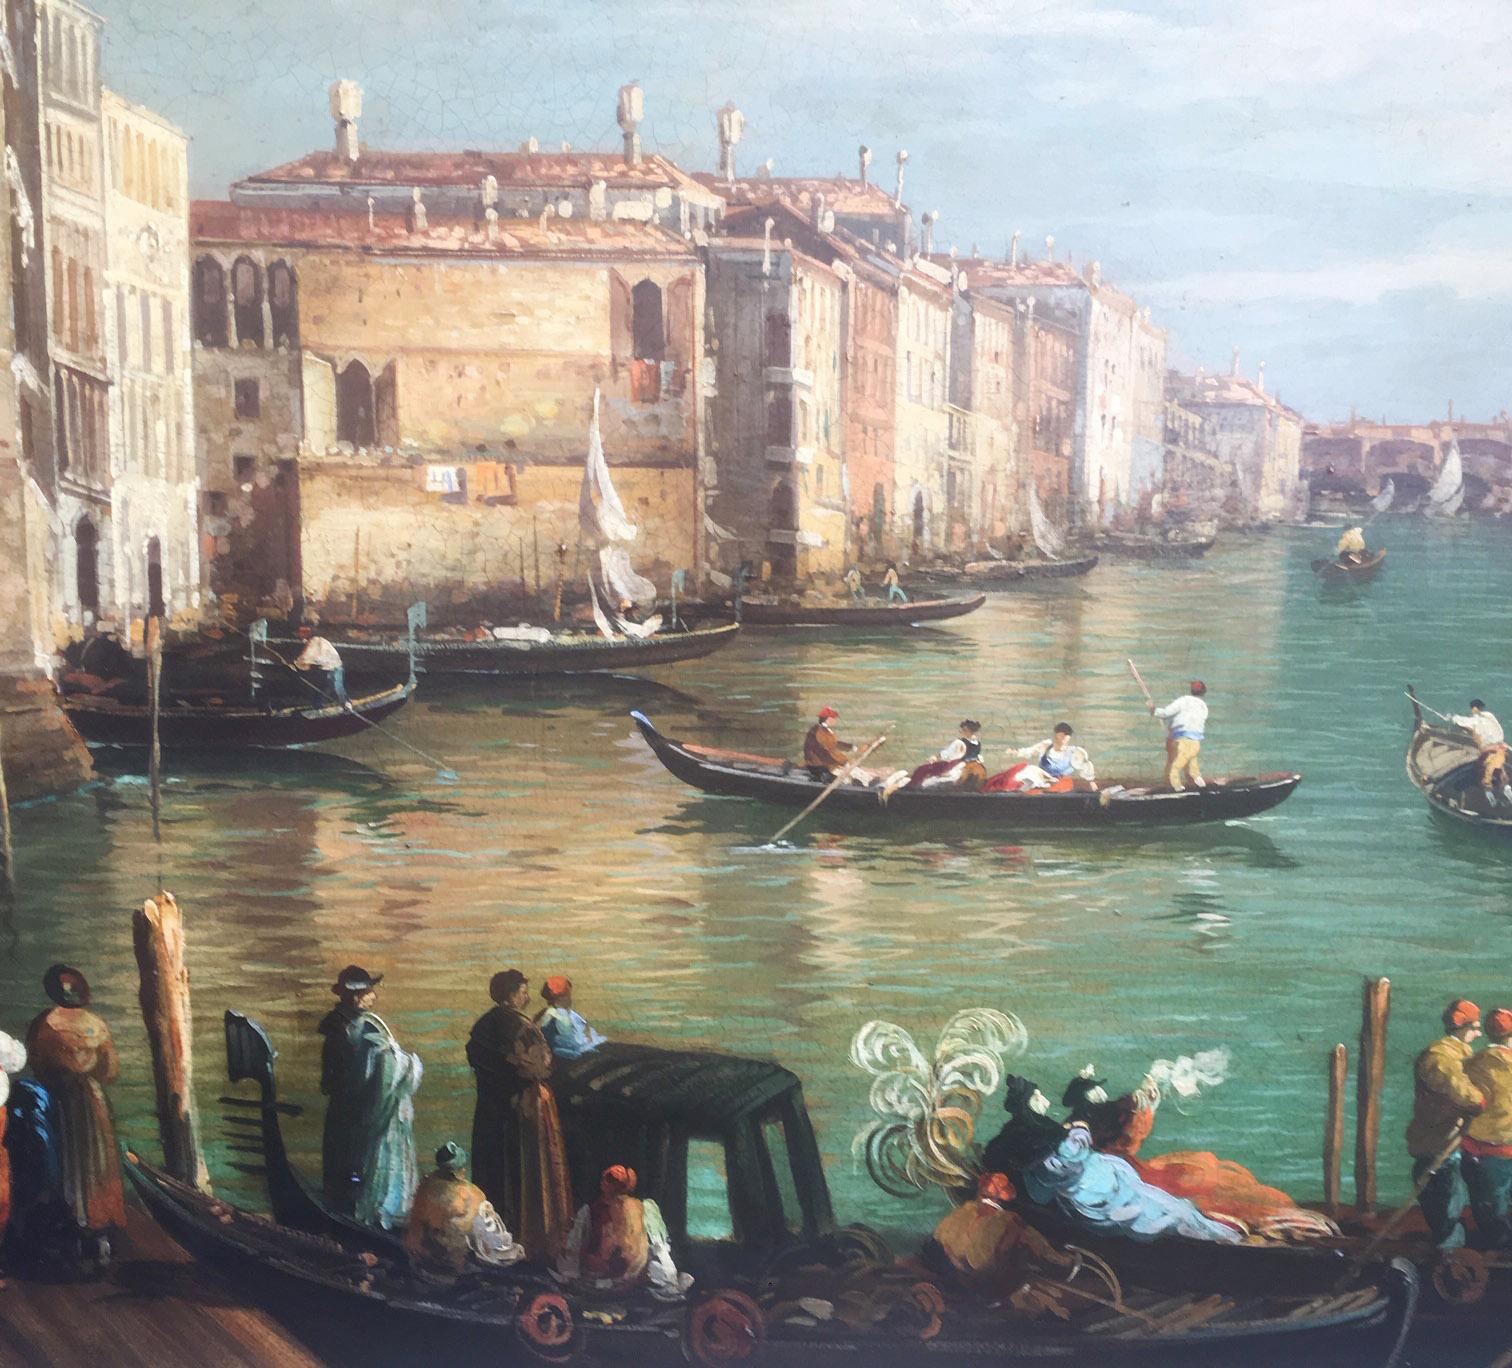 Venice - Mario De Angeli - Italia 2008 - Oil on canvas cm. 75x150. 

Mario De Angeli's canvas is an extraordinary work of Italian landscape painting. 
They are inspired by the landscape painting of Luca Carlevarijs, Canaletto's master, who dominated